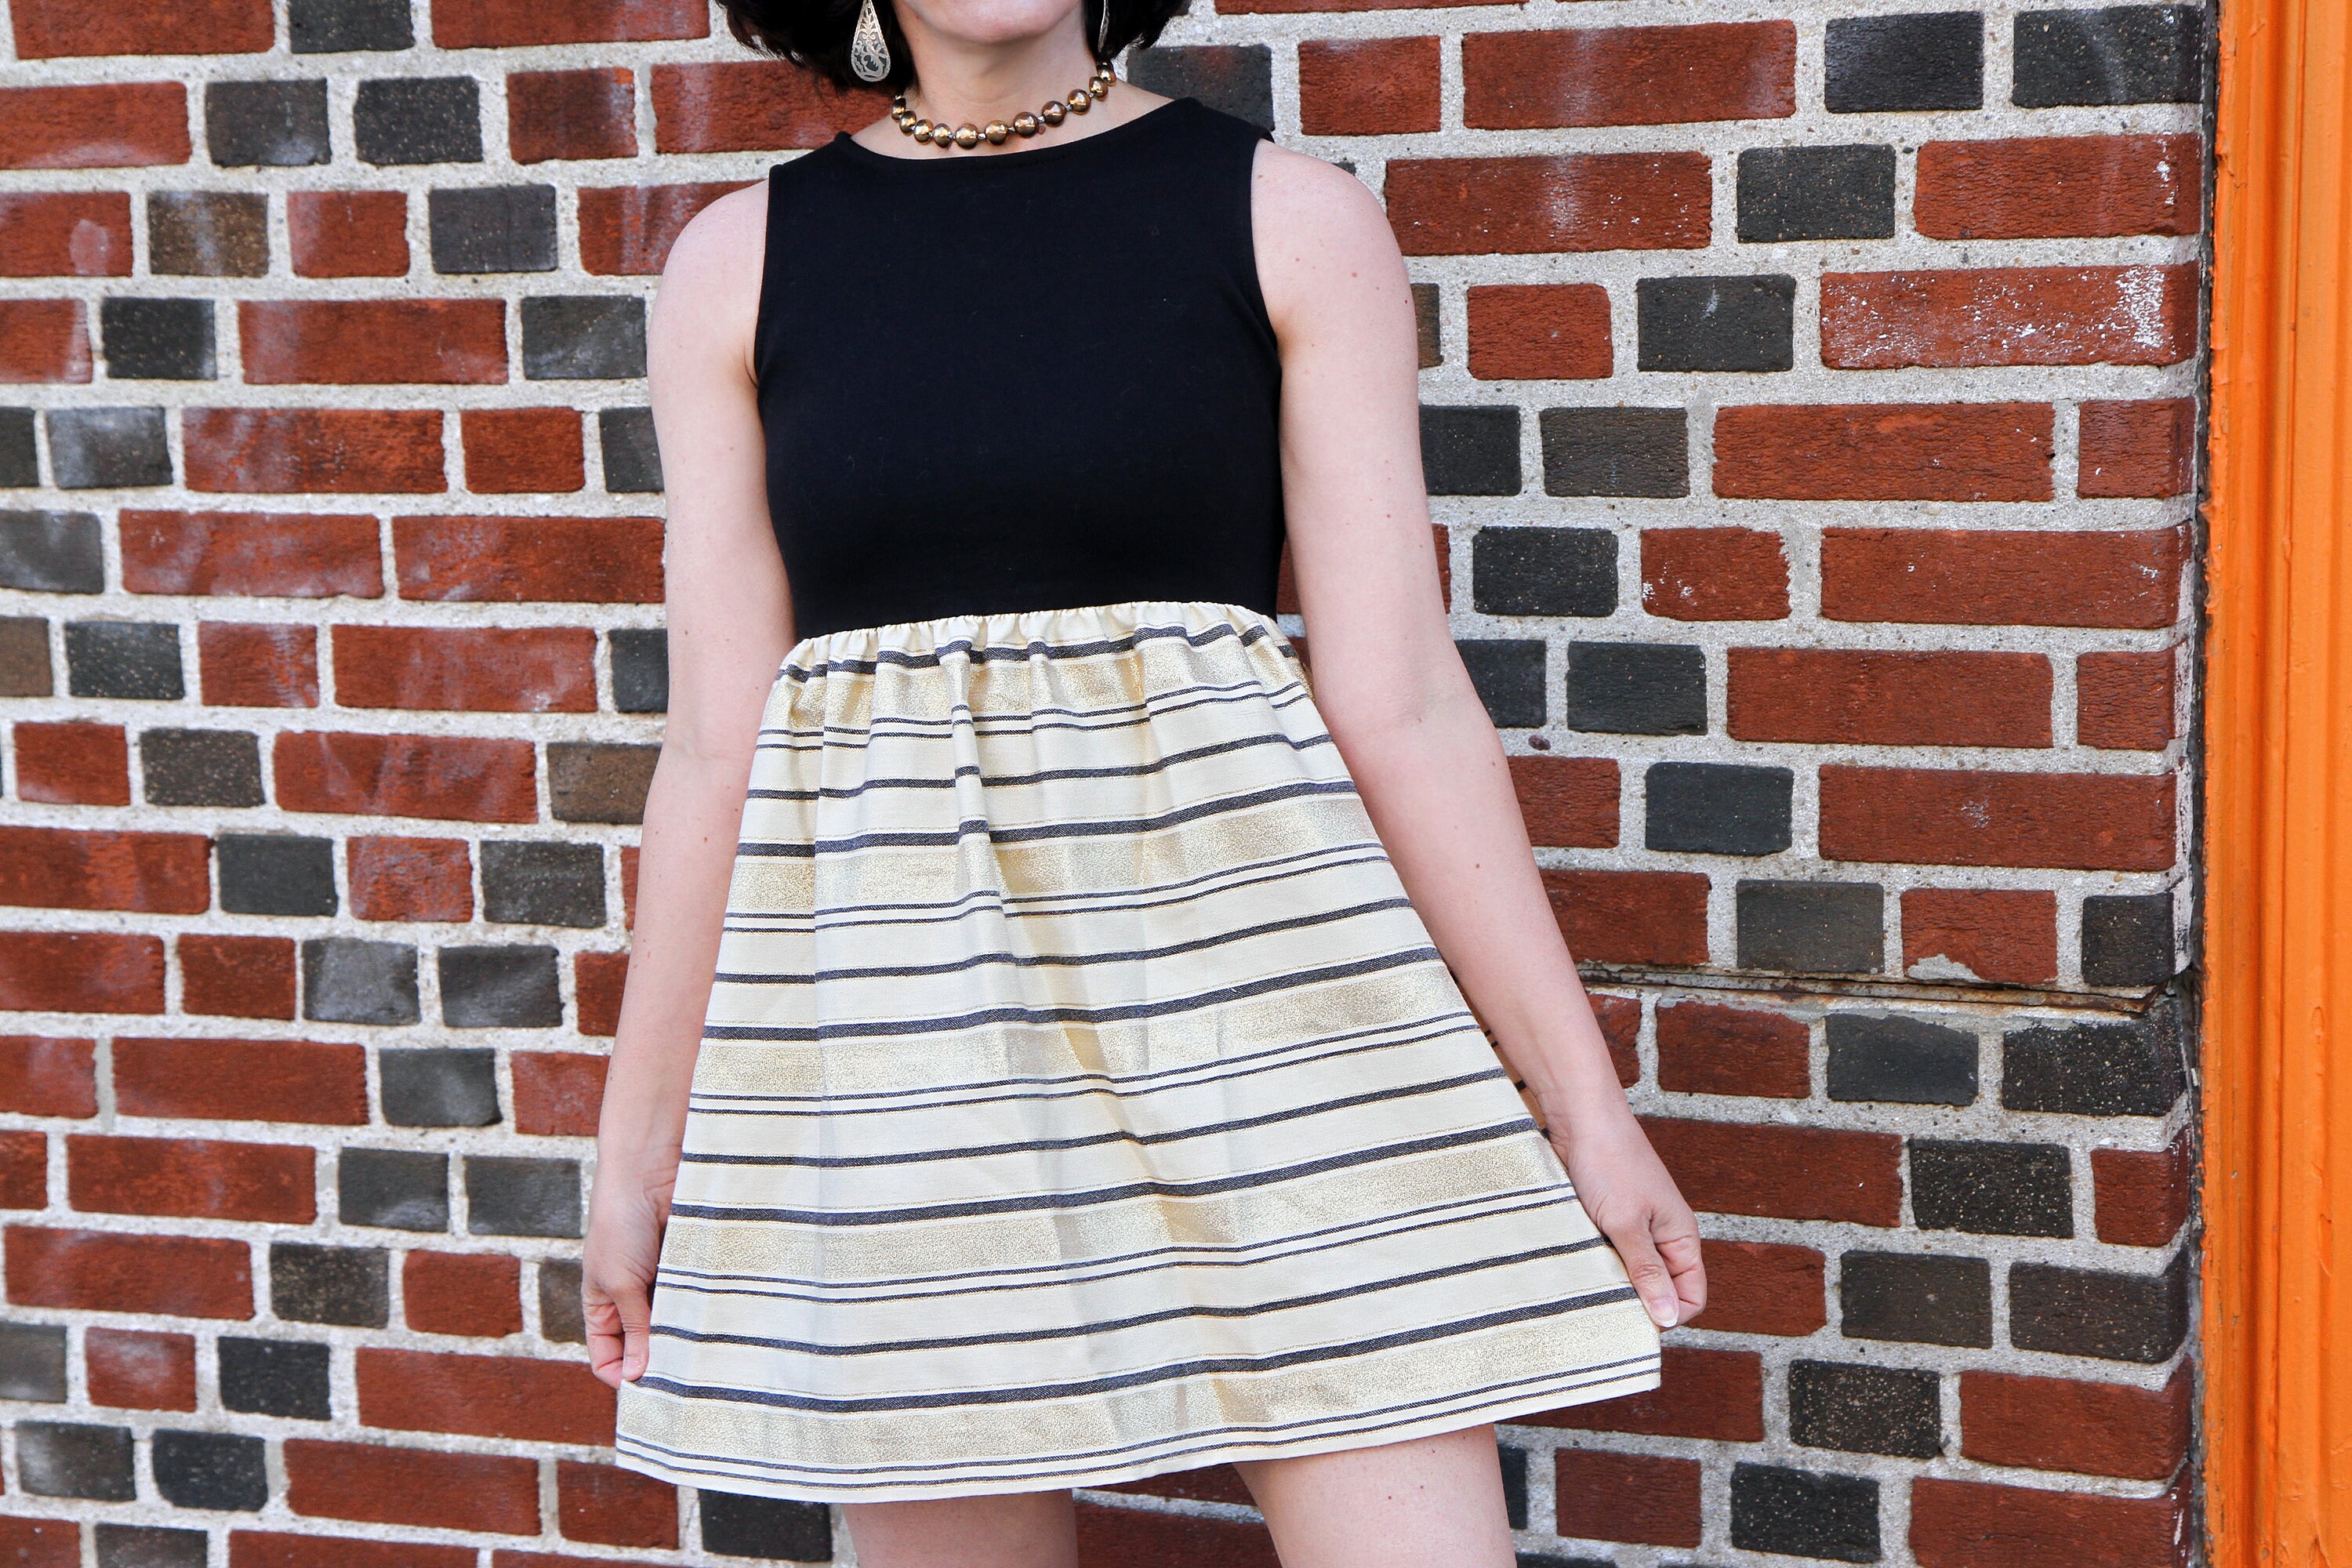 Cotton Blend Striped Mini Dress Size Xxs To Xs, Black Beige Sleeveless With Gold Stripes, Little Girls Metallic 10 Years